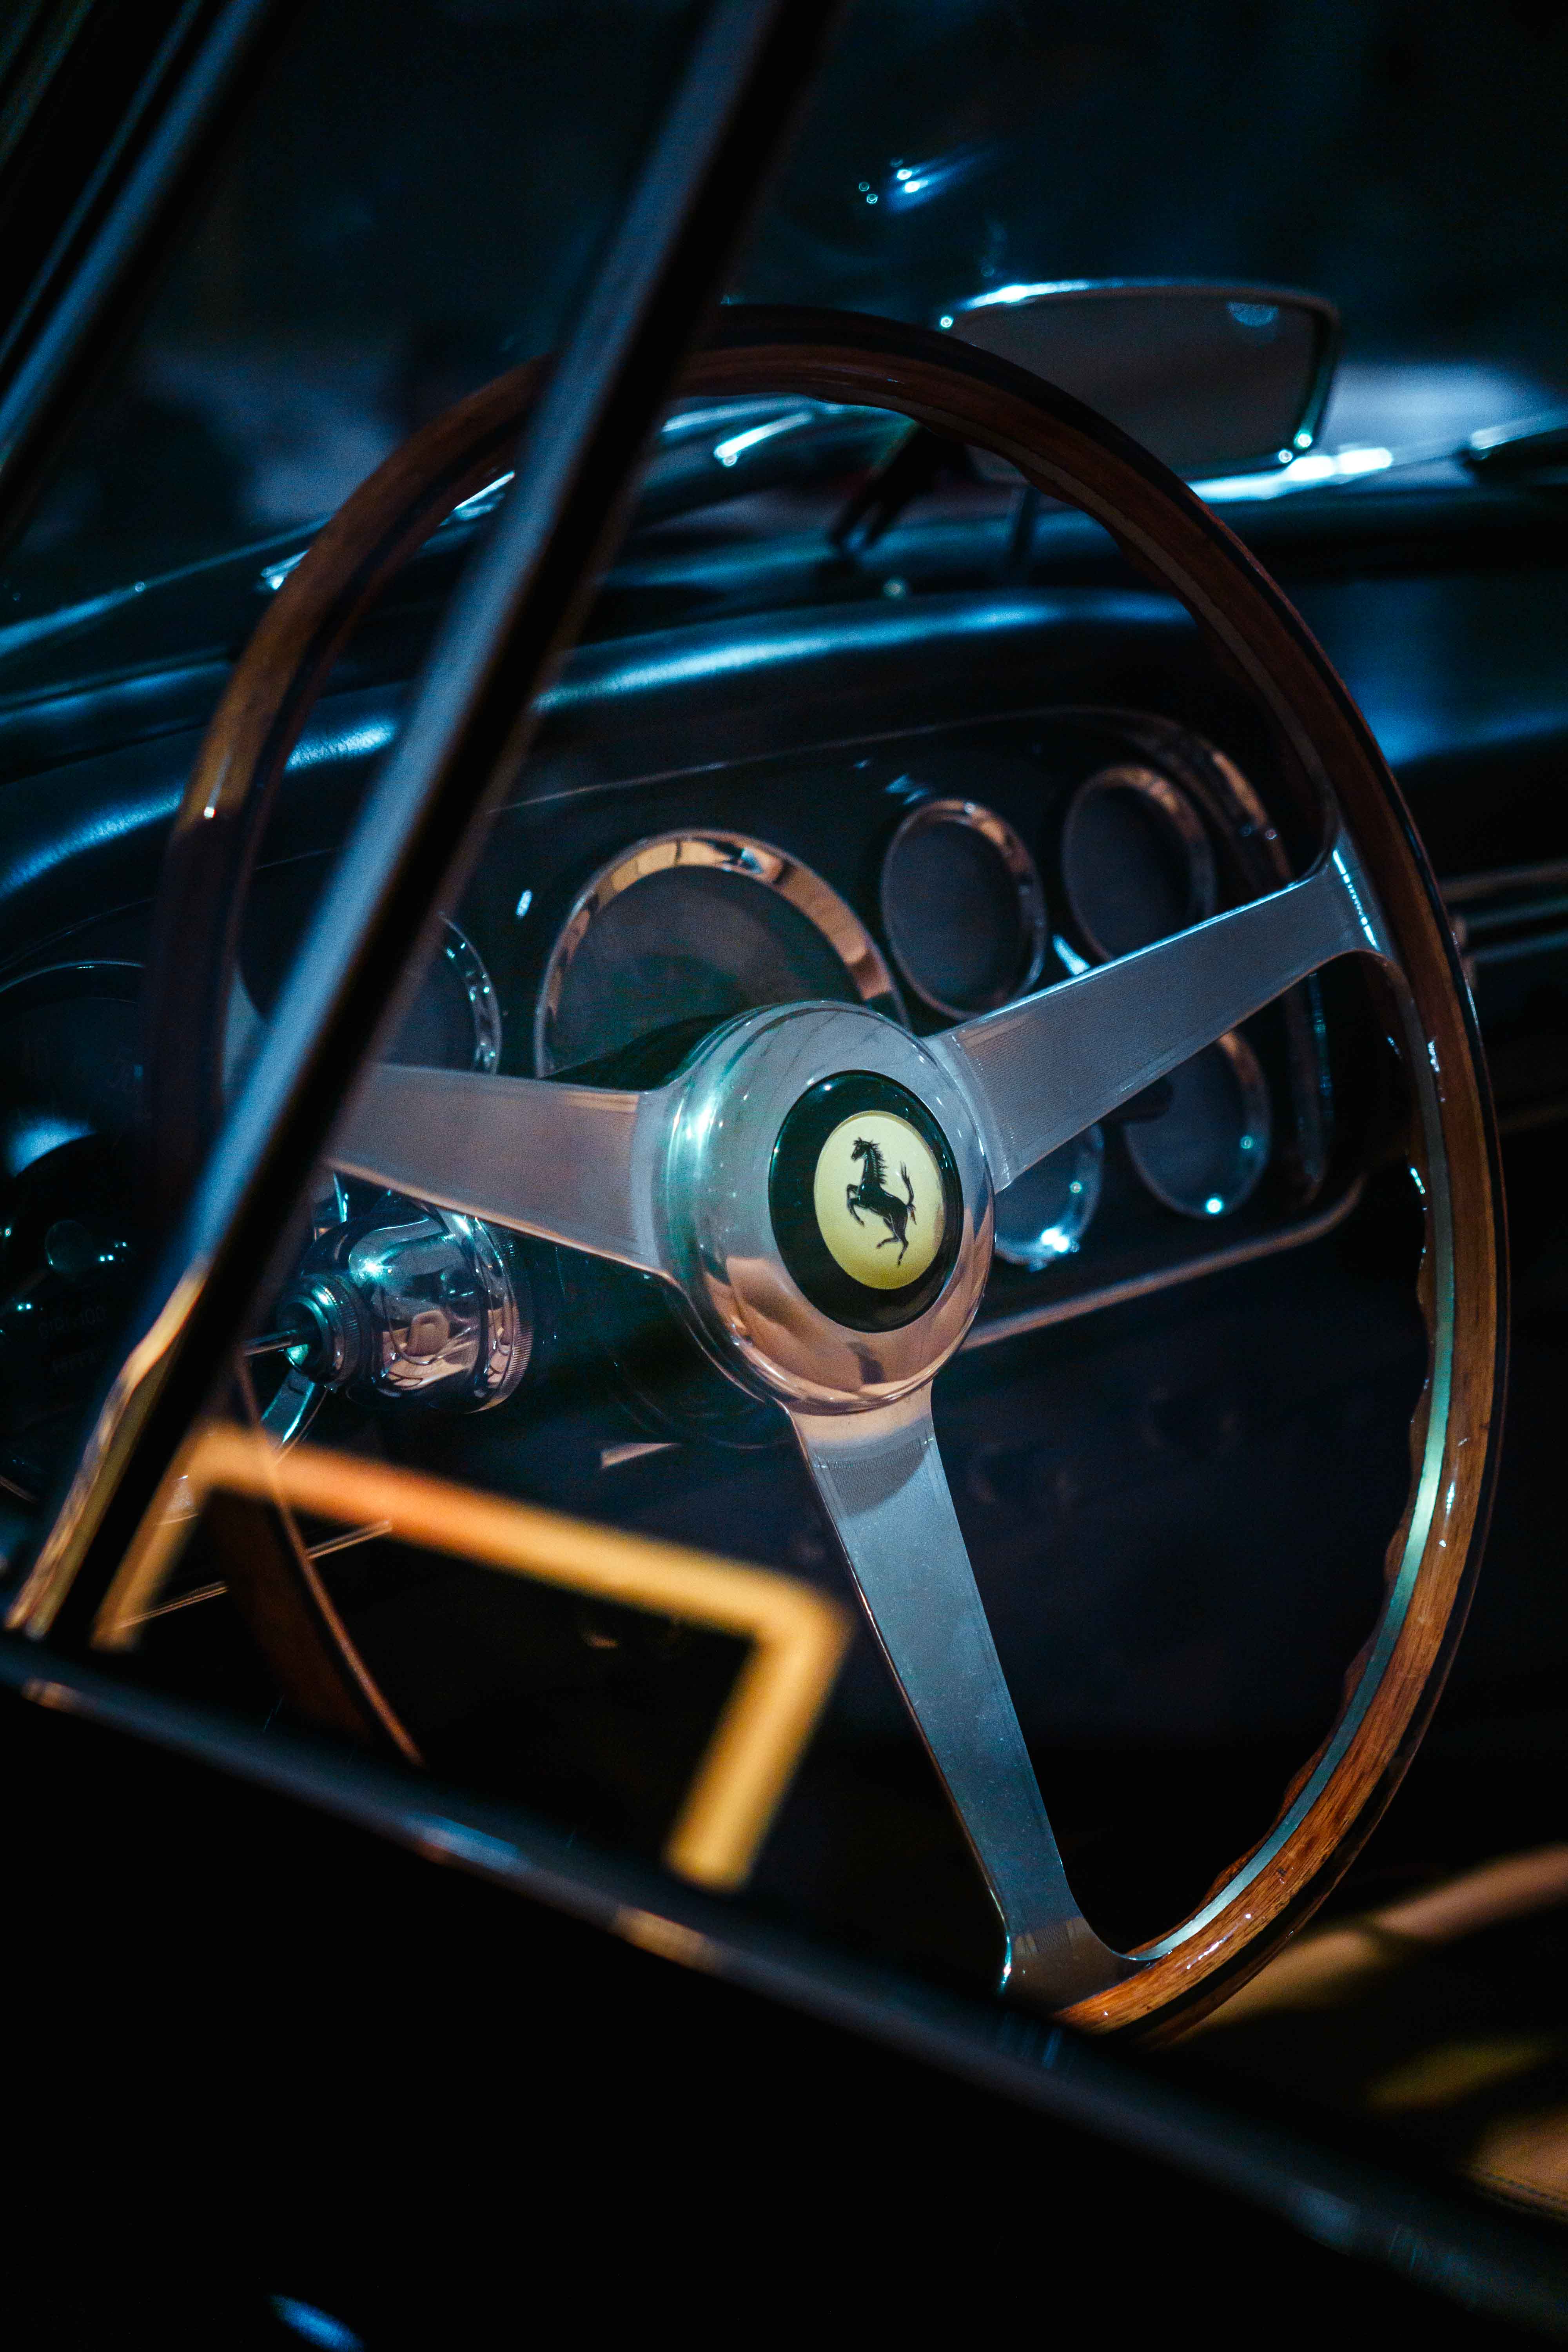 Steering wheel photo of old Ferrari